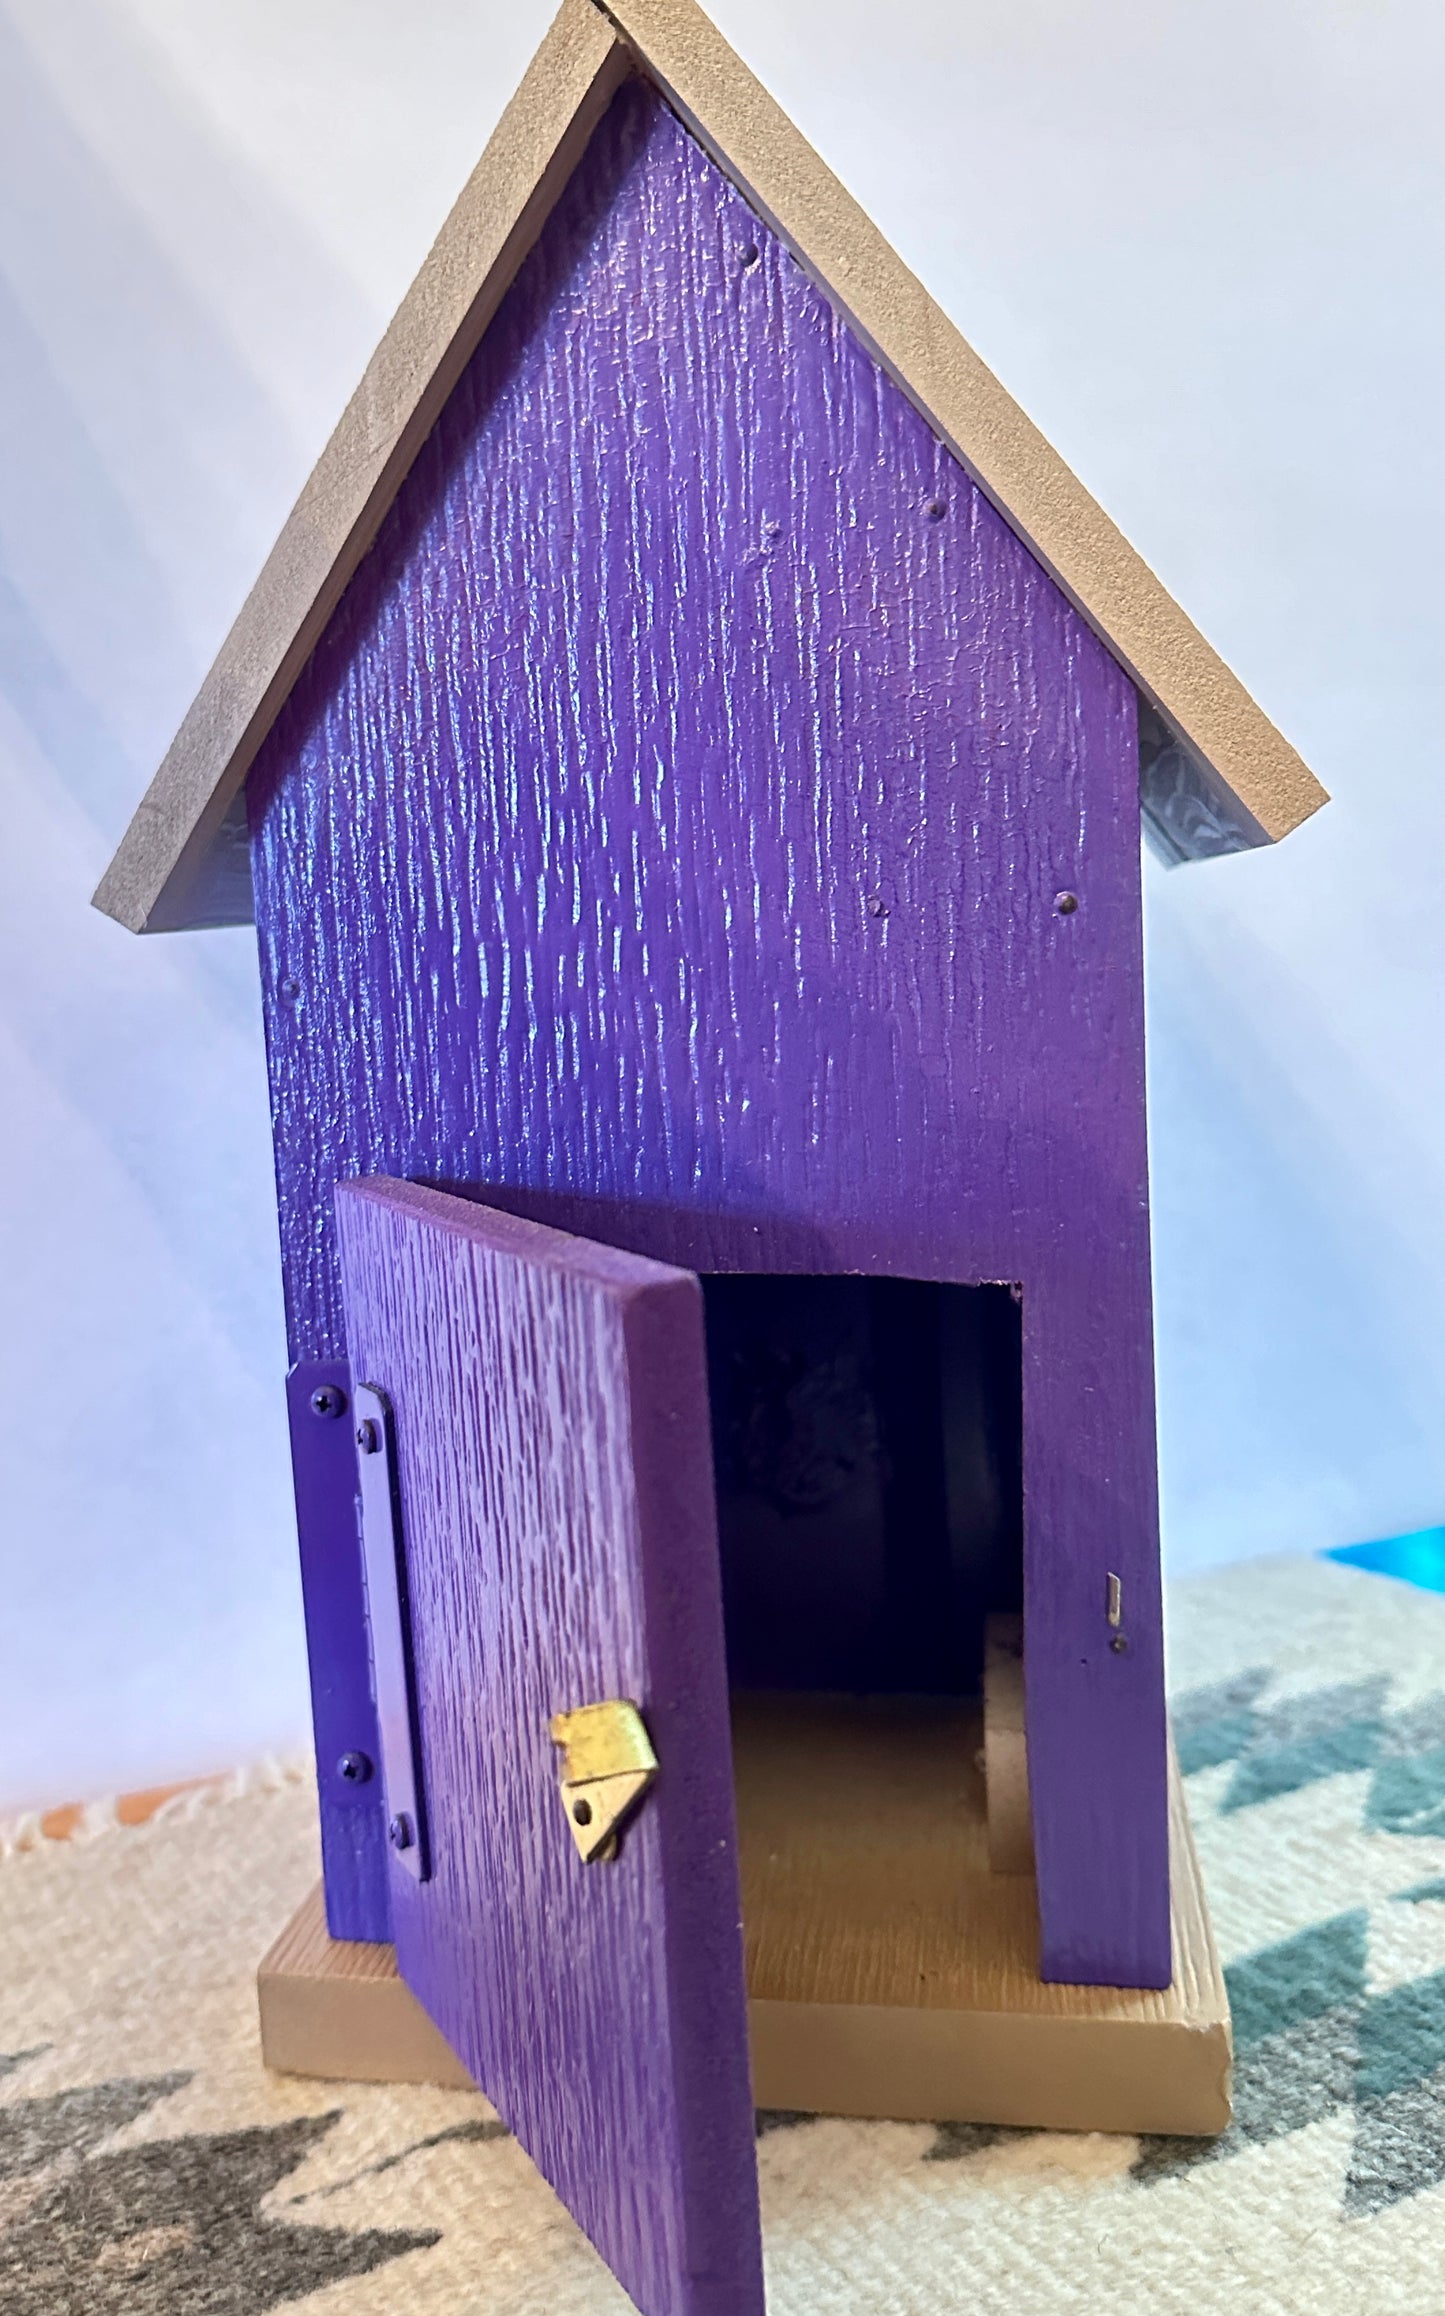 Repurposed Birdhouse - Purple House with Crystal Door Knob, by Richard Mohr